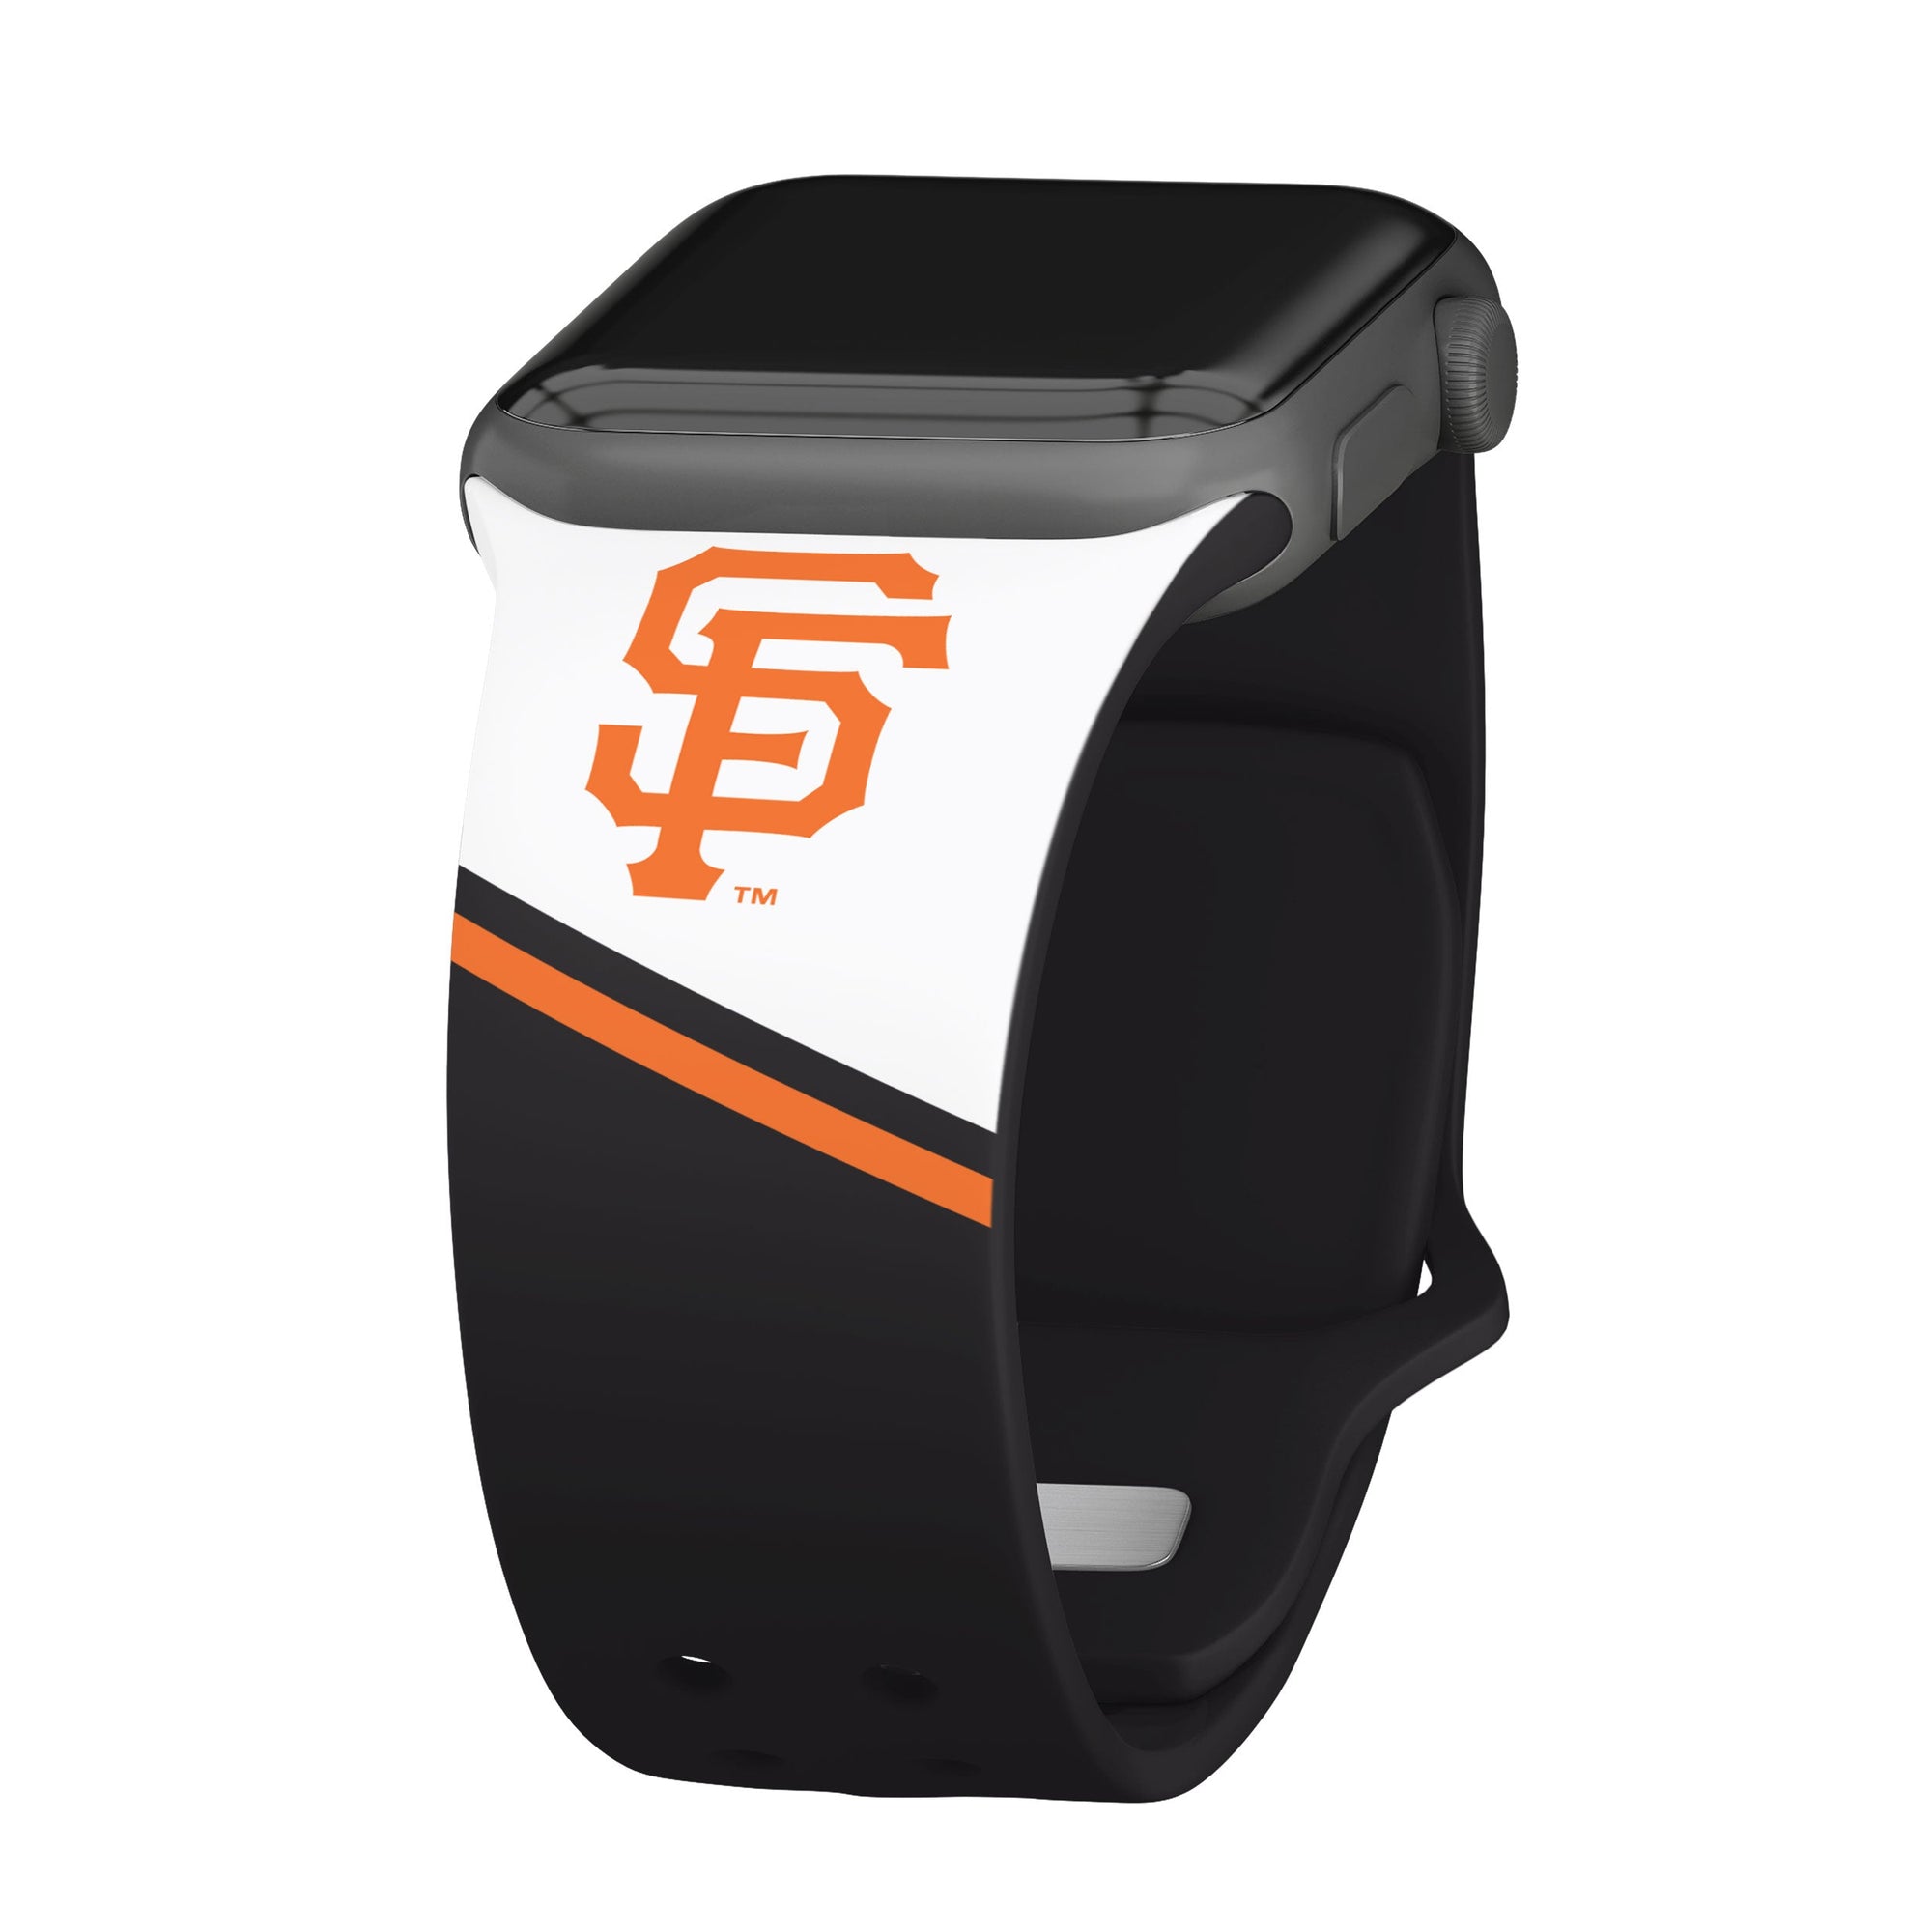 San Francisco Giants HD Champion Series Apple Watch Band